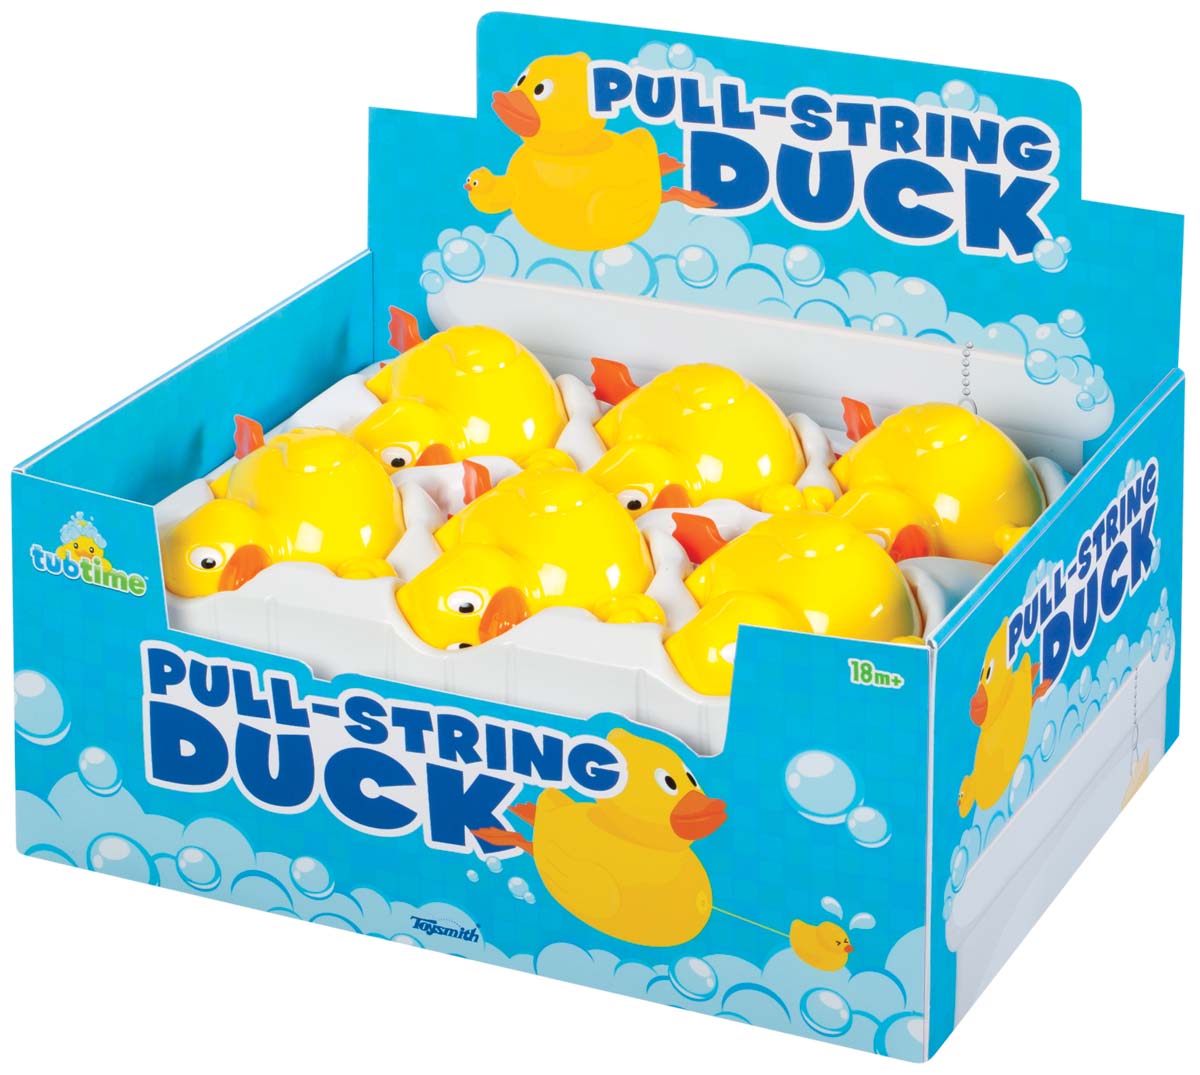 Tub TIme Pull-String Duck – Toysmith